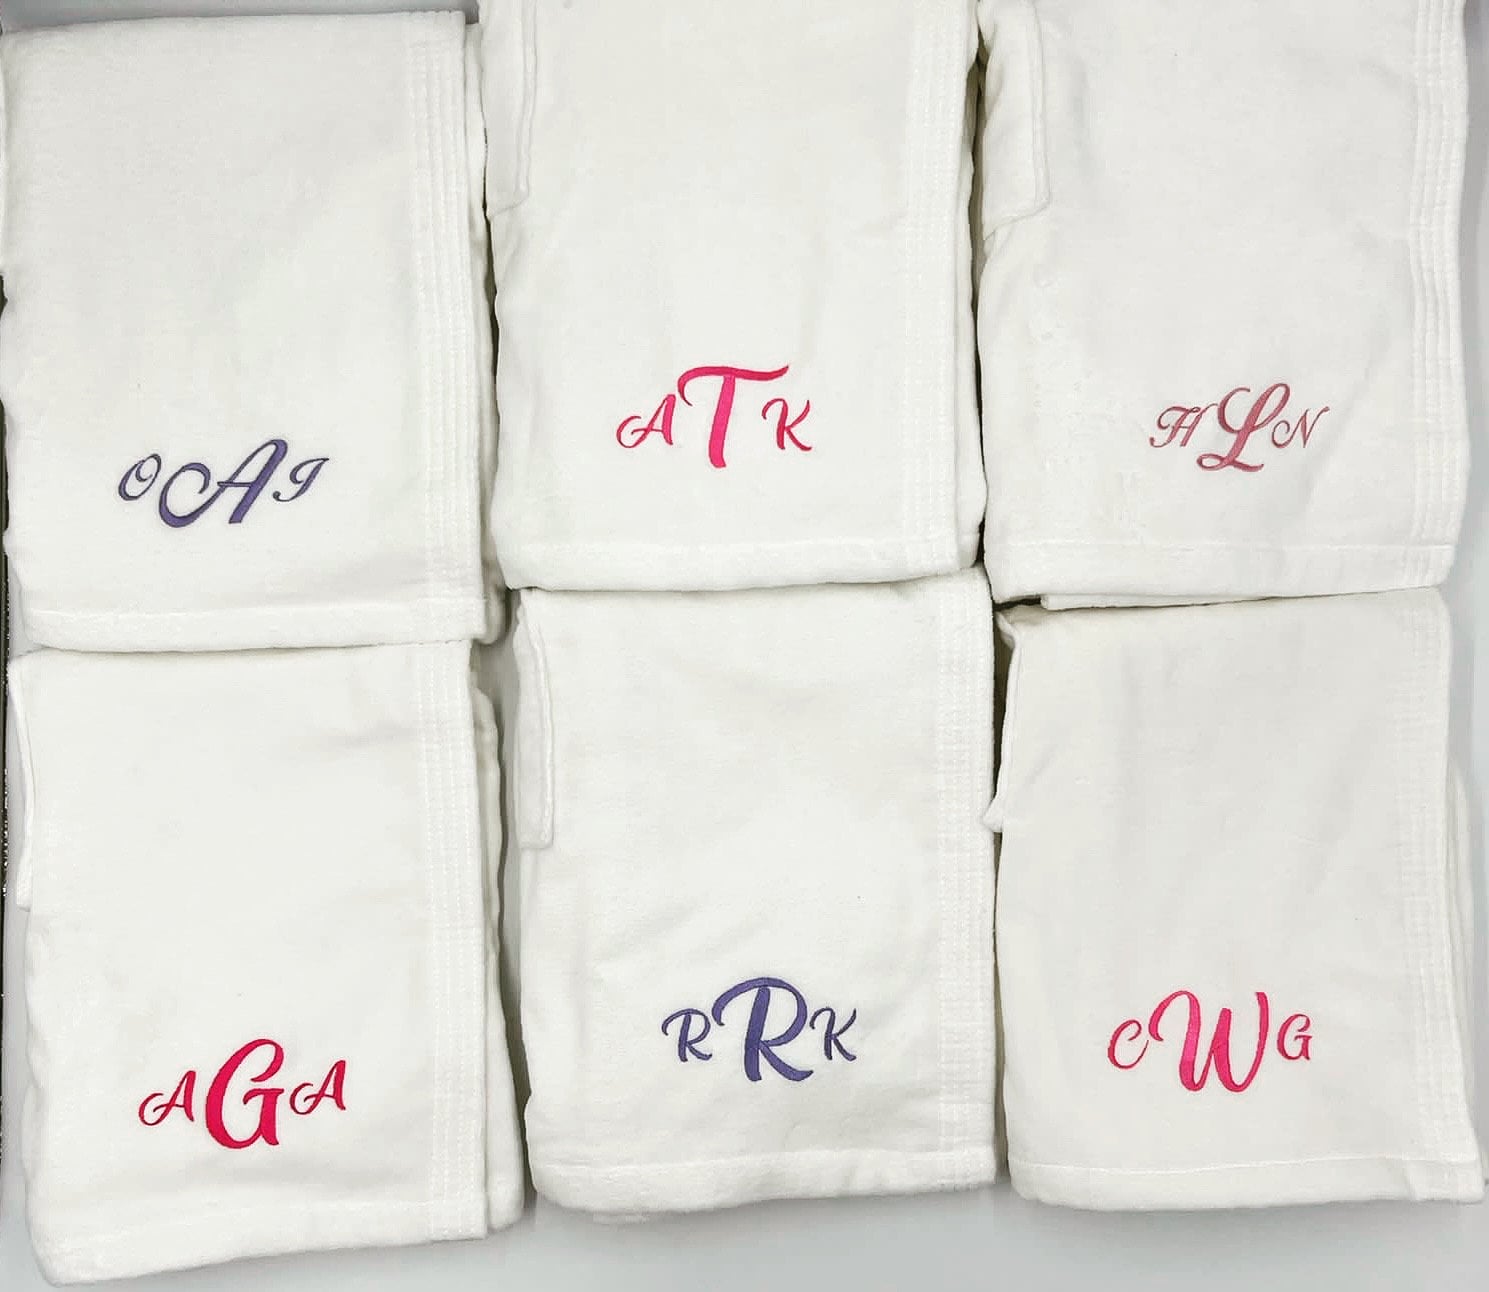 Towel Wrap Towels :: Terry Wraps :: 100% Turkish Cotton White